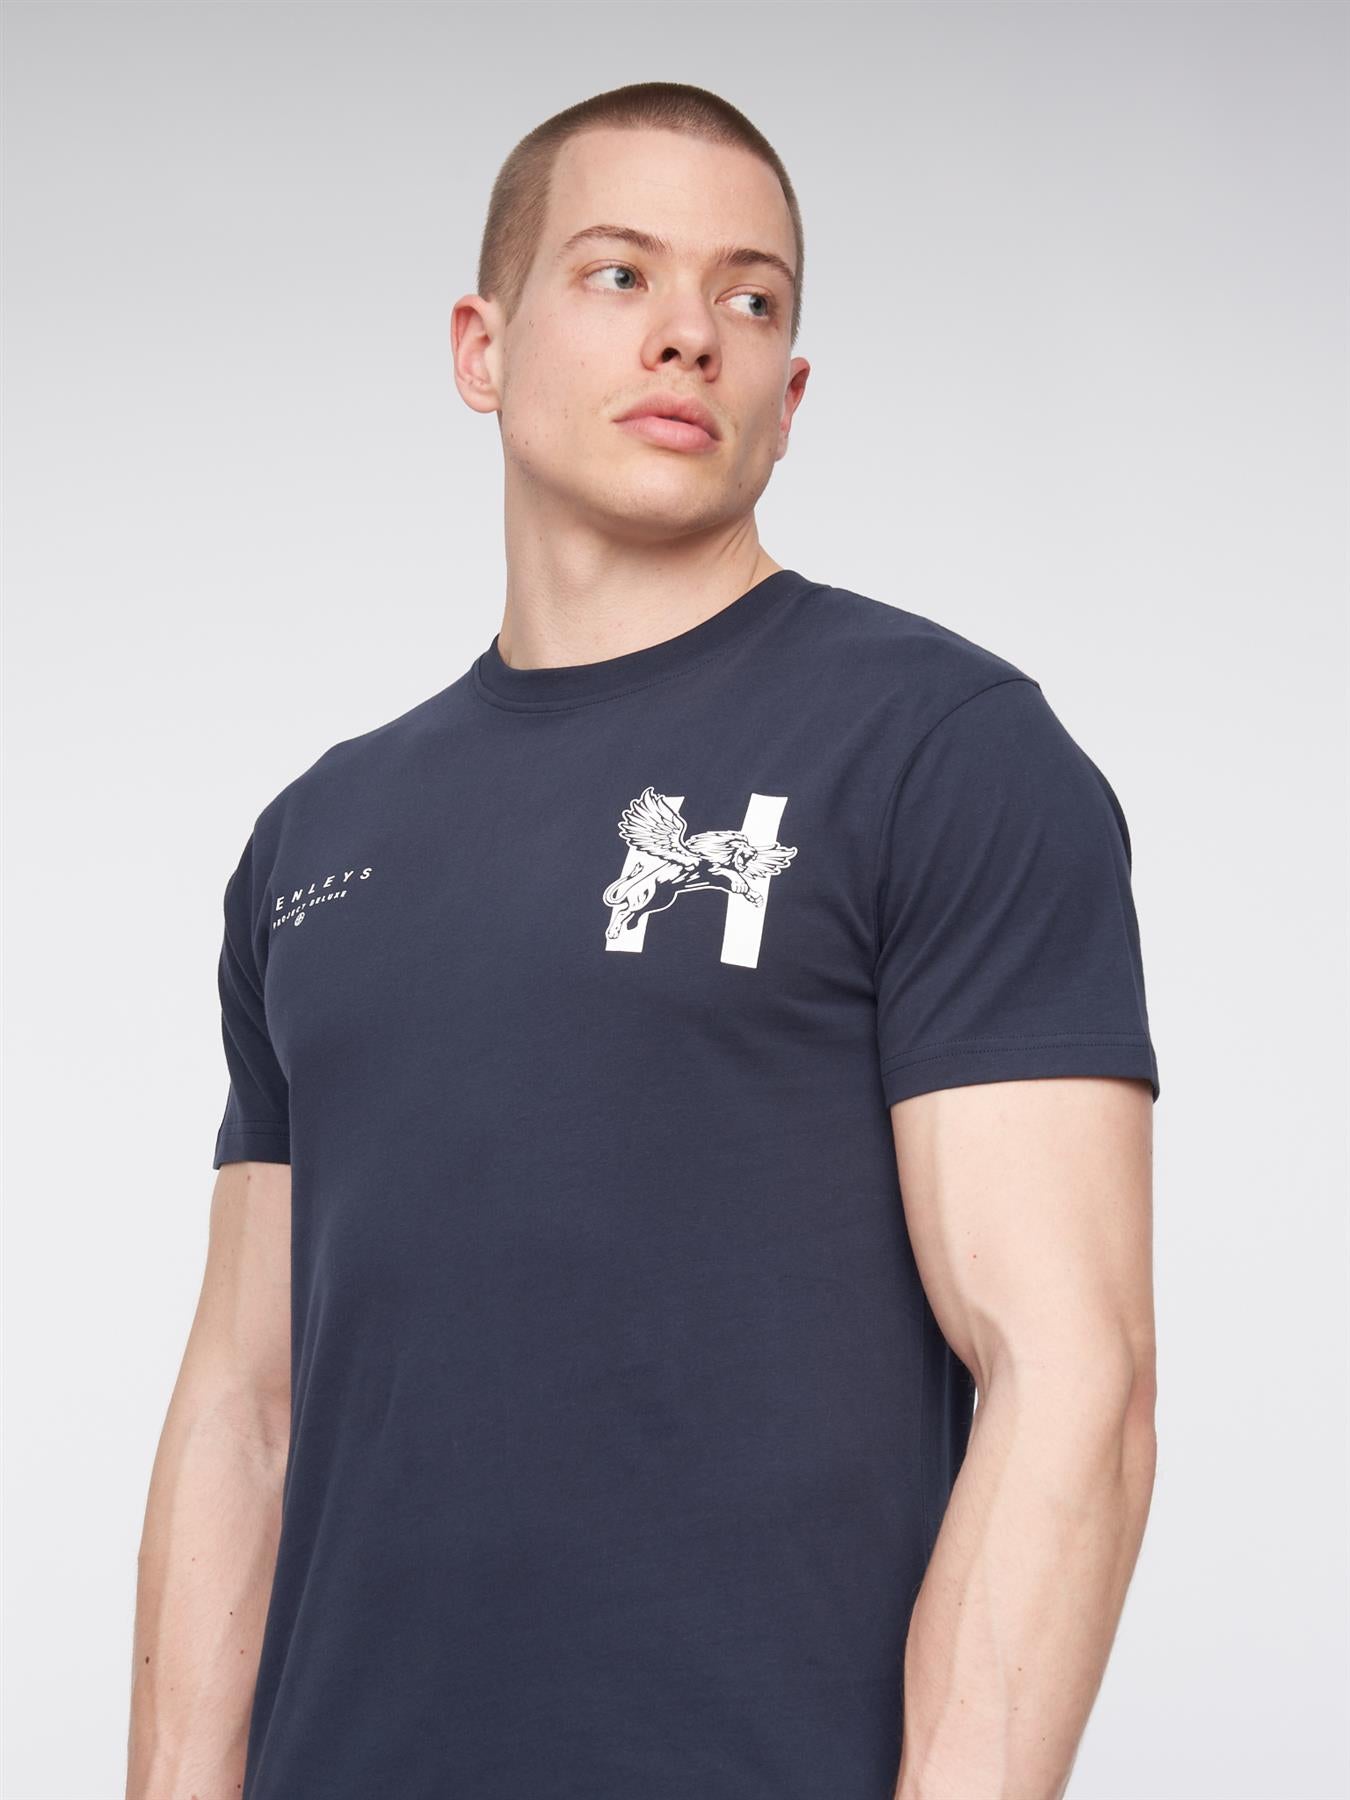 Kilhen T-Shirt Navy